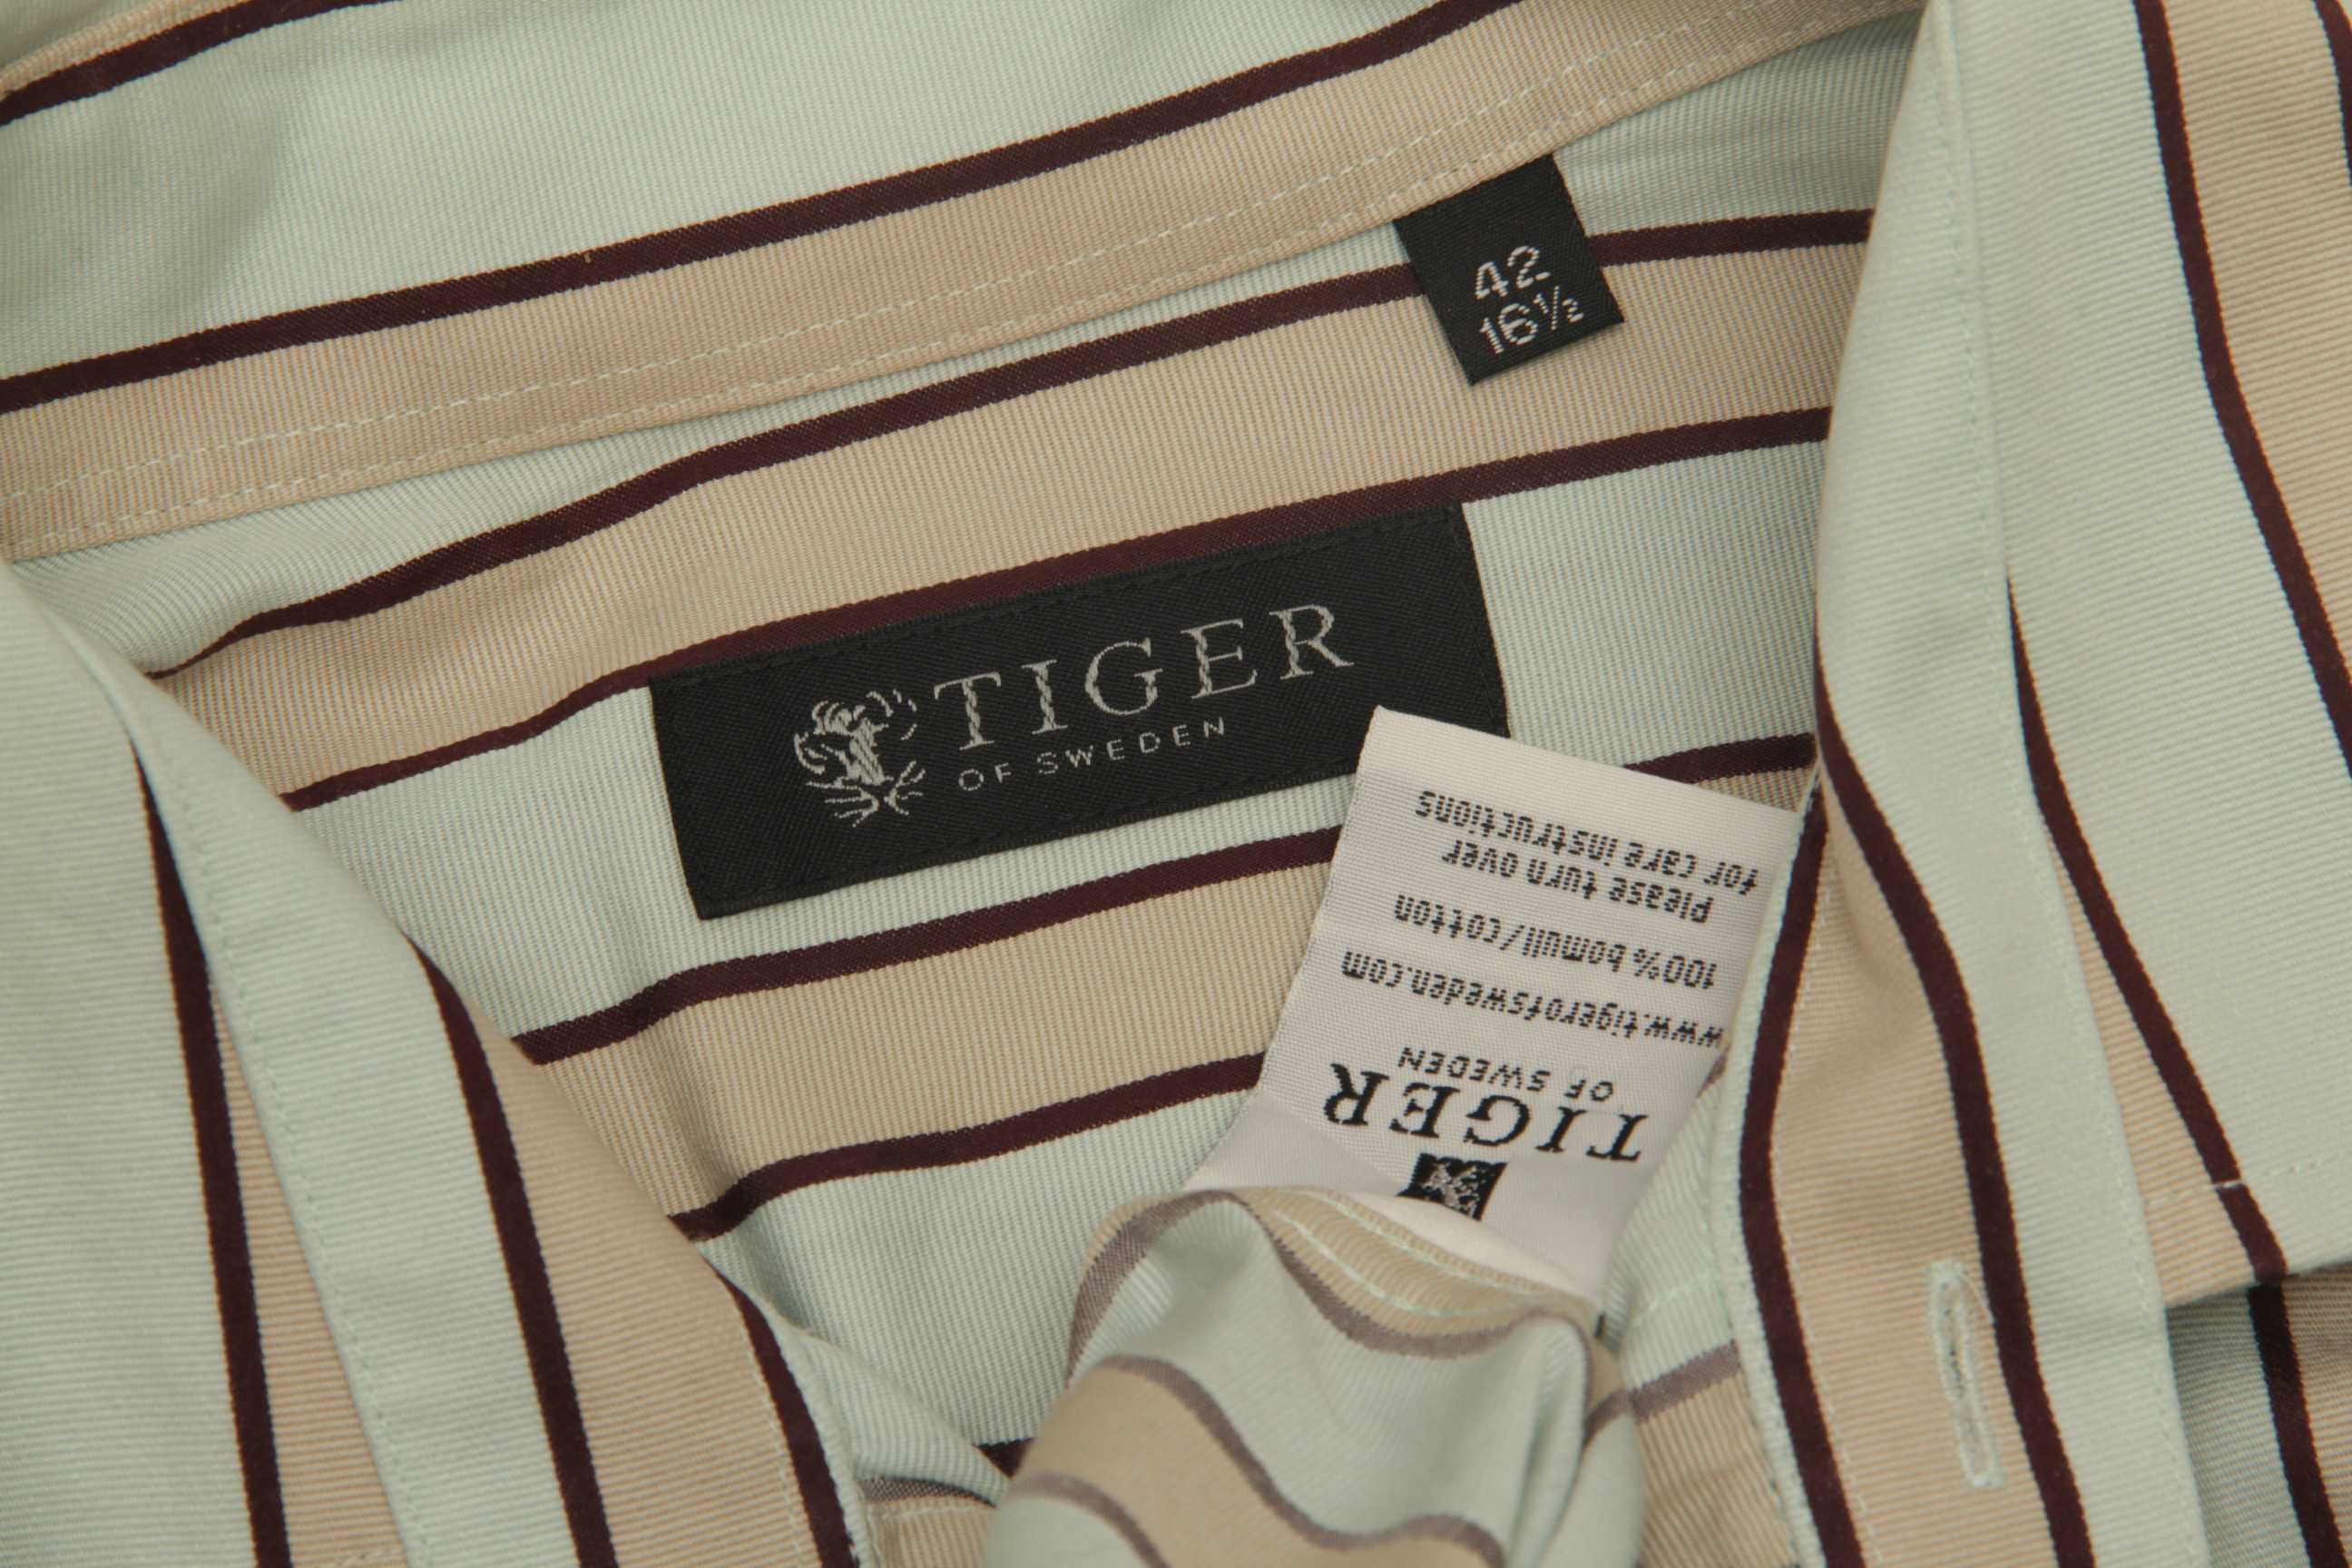 Tiger Of Sweden рр 42 16 1/2 M-L  рубашка из хлопка скандинавия